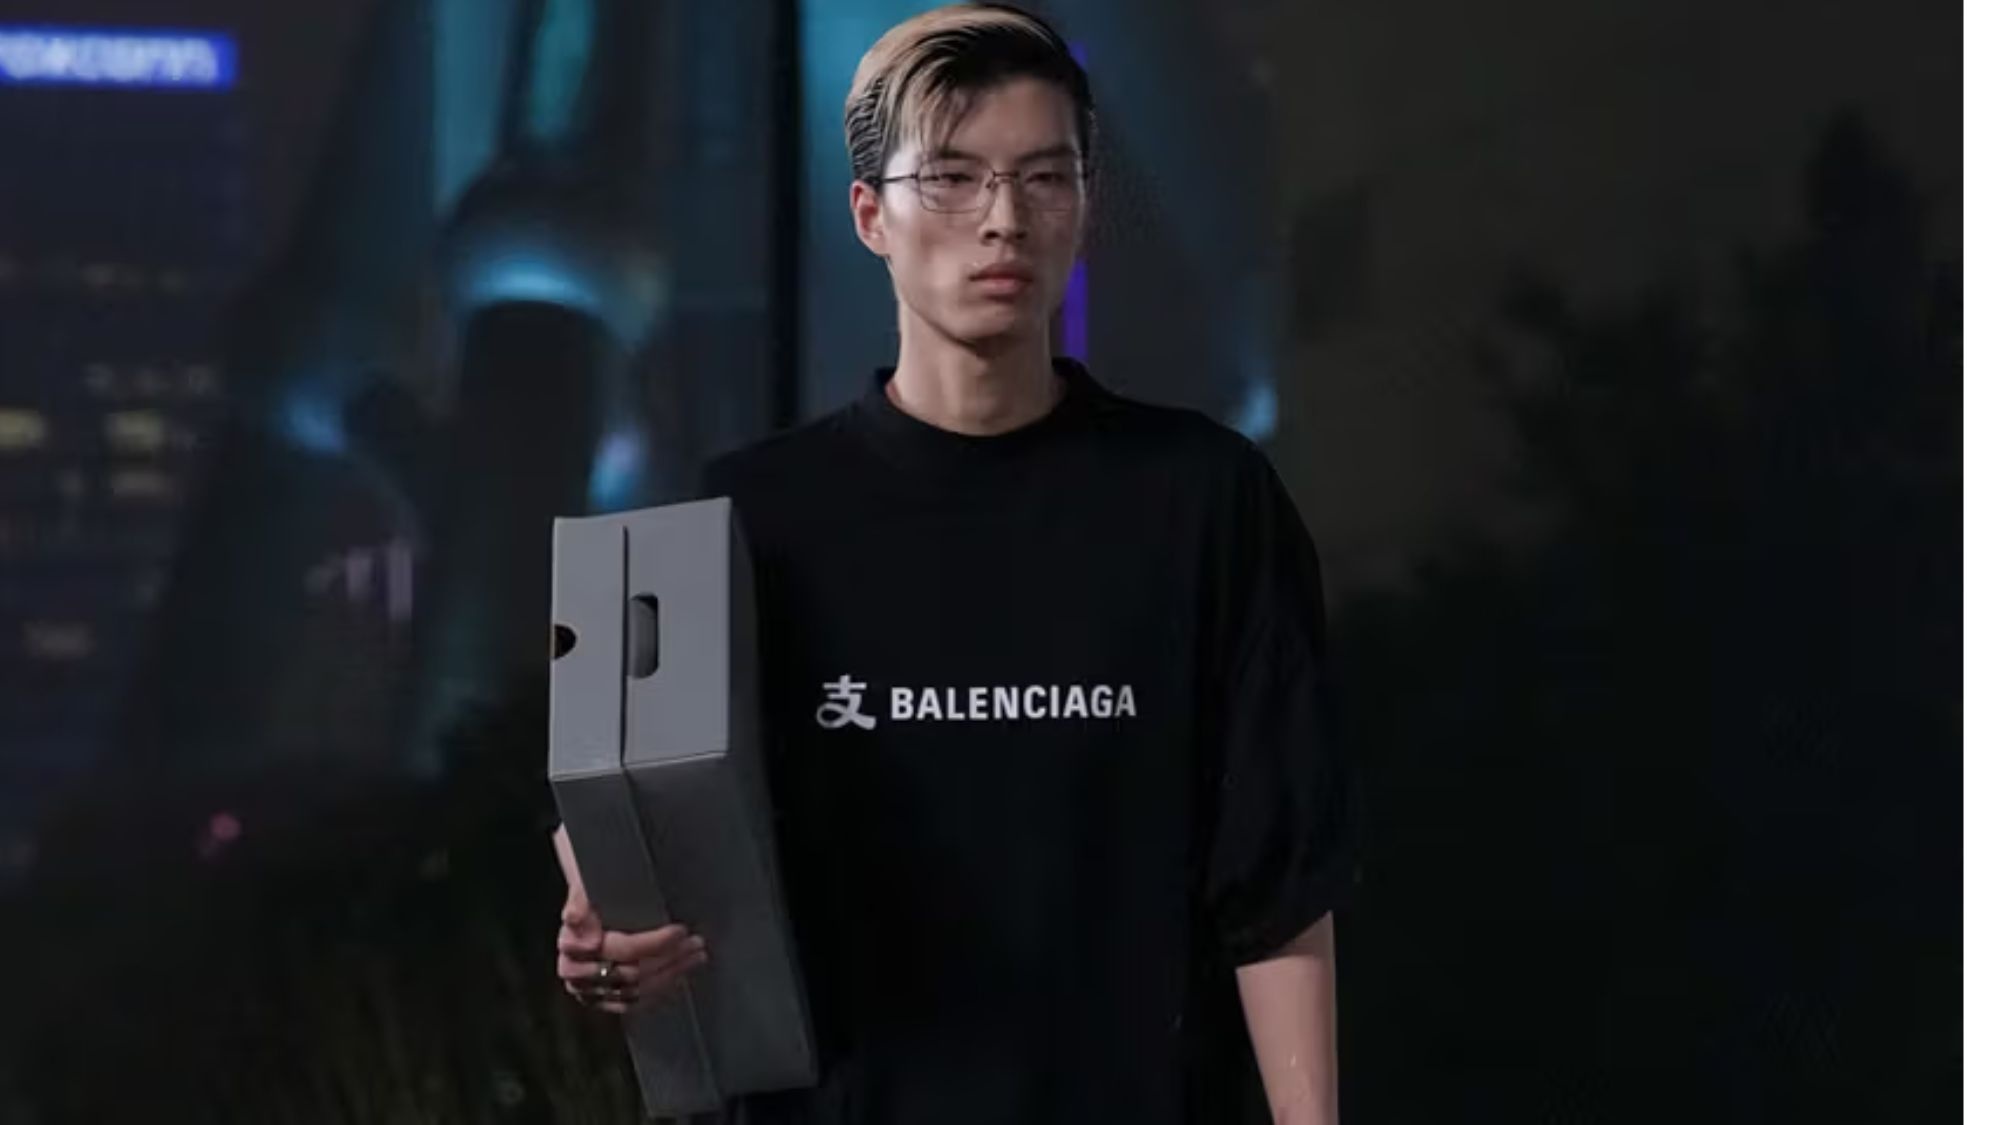 Balenciaga's Alipay collaboration has been featured in Xiaohongshu's Balenciaga ugly fashion hashtag by consumers. Image: Balenciaga